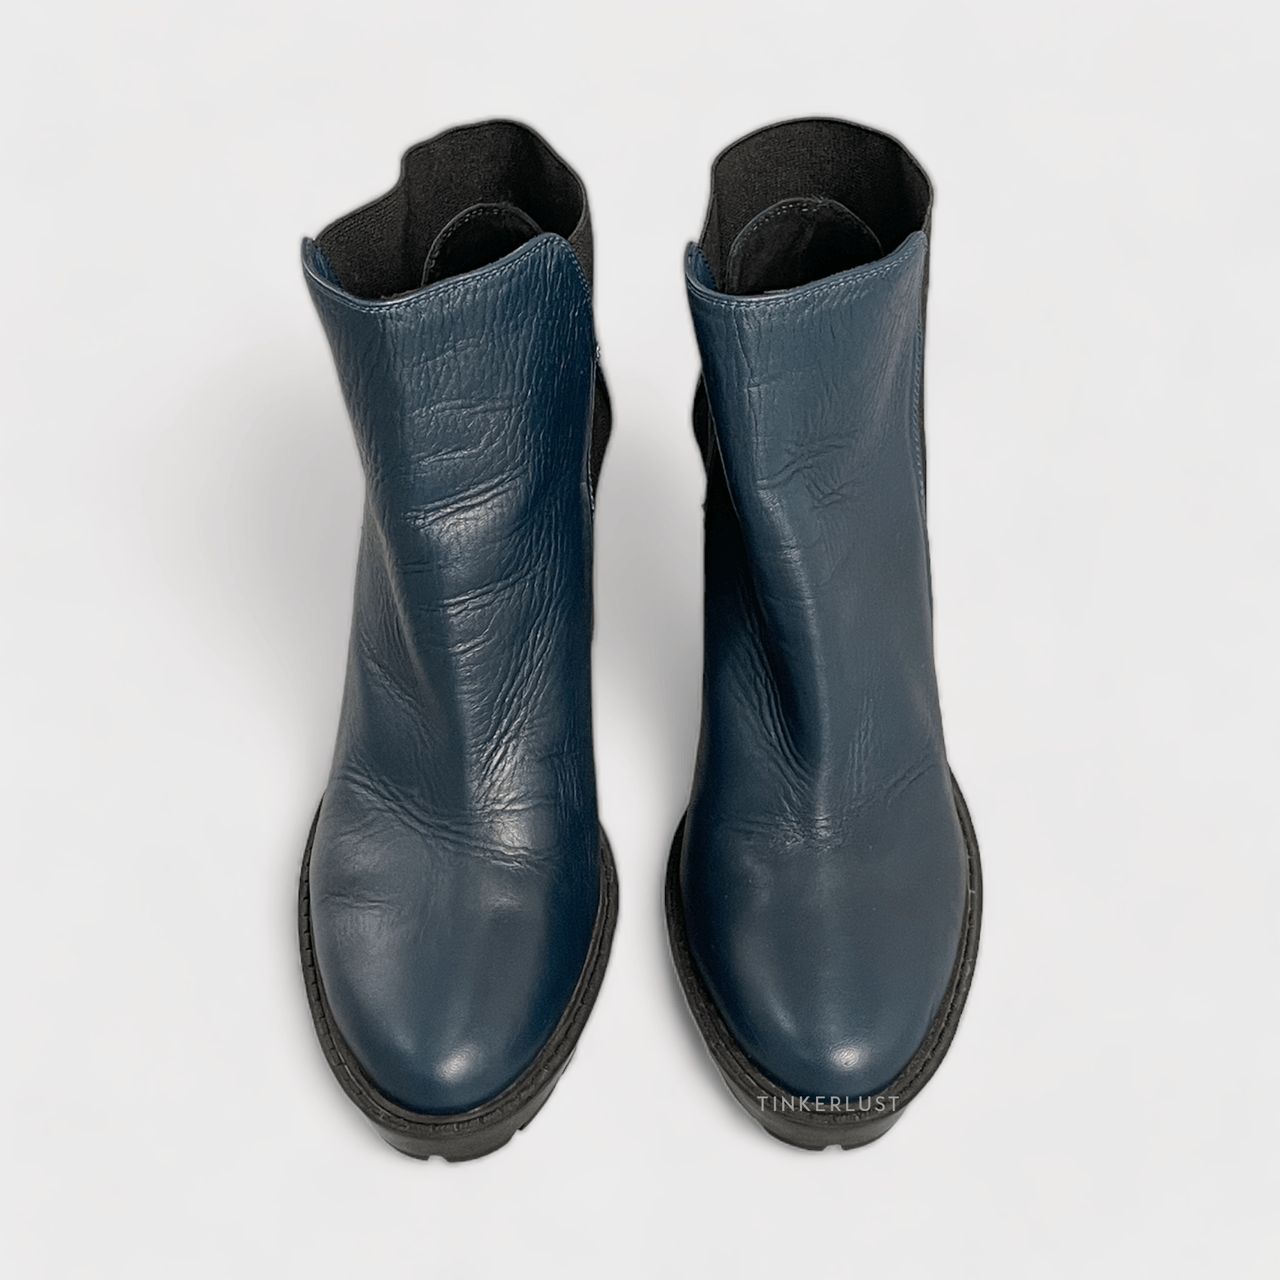 Studio Pollini Black & Teal Boots